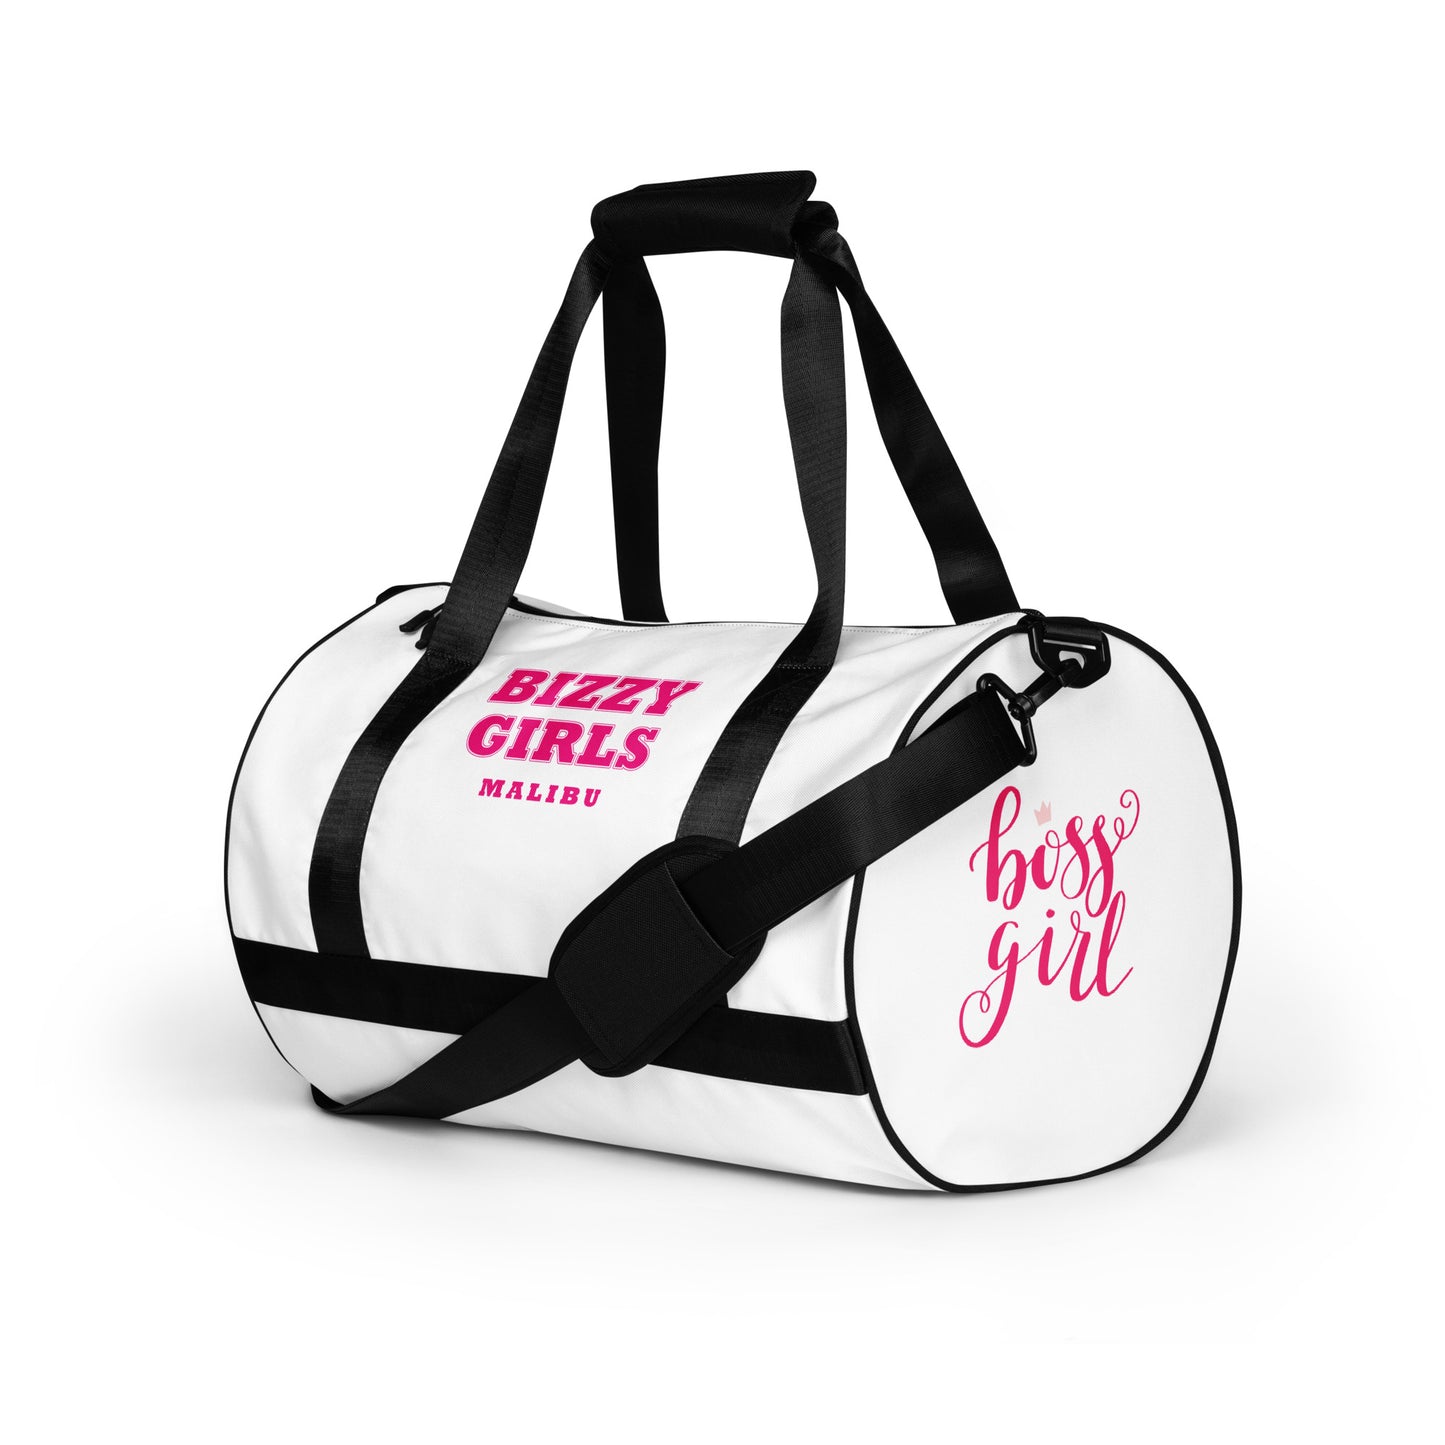 All-over print gym bag Bizzy Girls Malibu